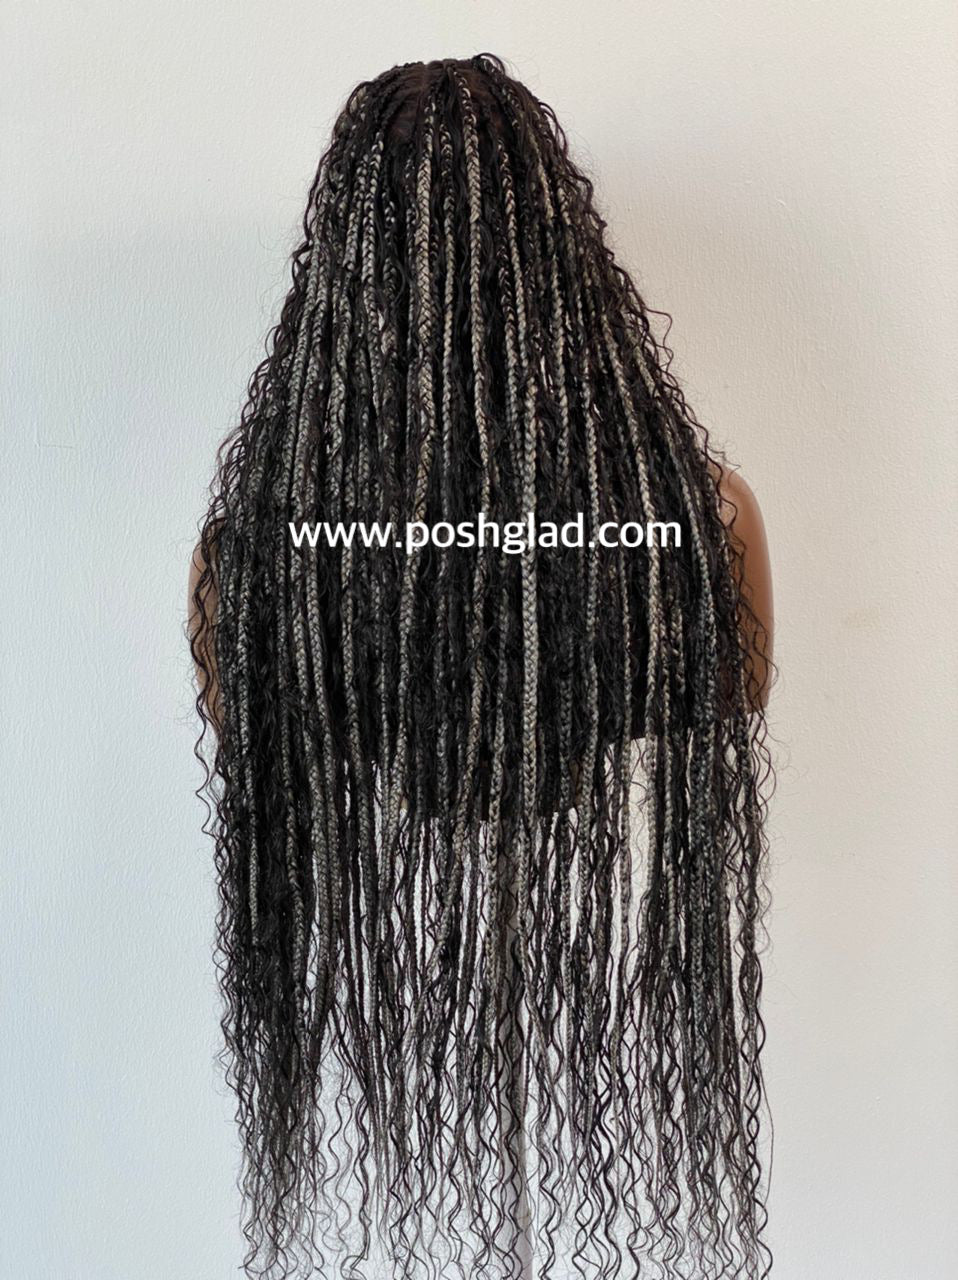 Bohemian Knotless Braid Wig "HD Full Lace" - PARIS Poshglad Braided Wigs Bohemian Knotless Braid Wig